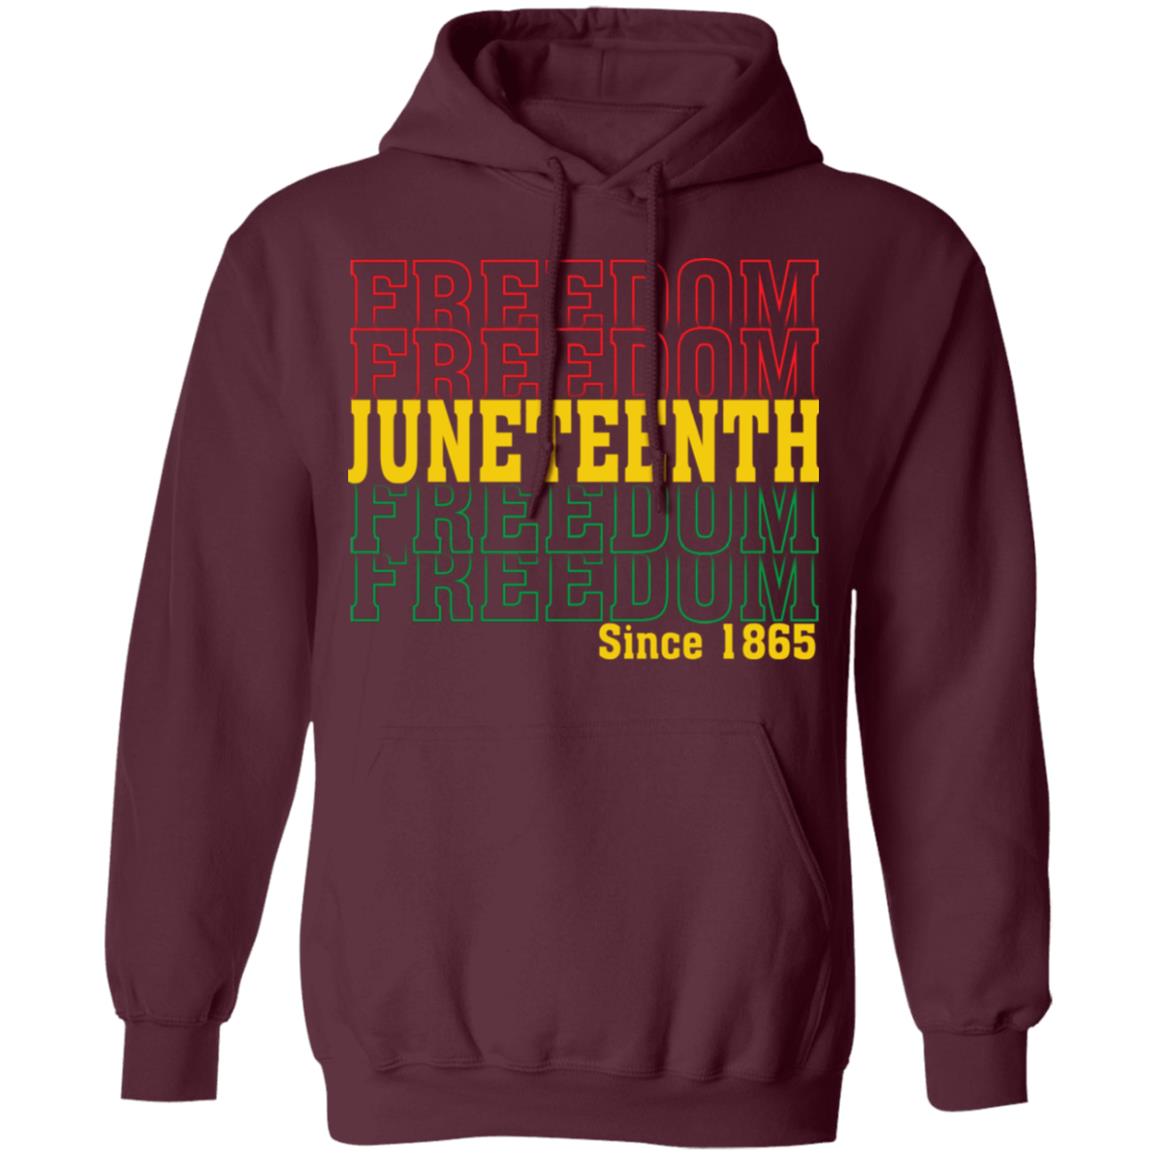 Juneteenth Freedom Since 1865 T-shirt Apparel Gearment Unisex Hoodie Maroon S